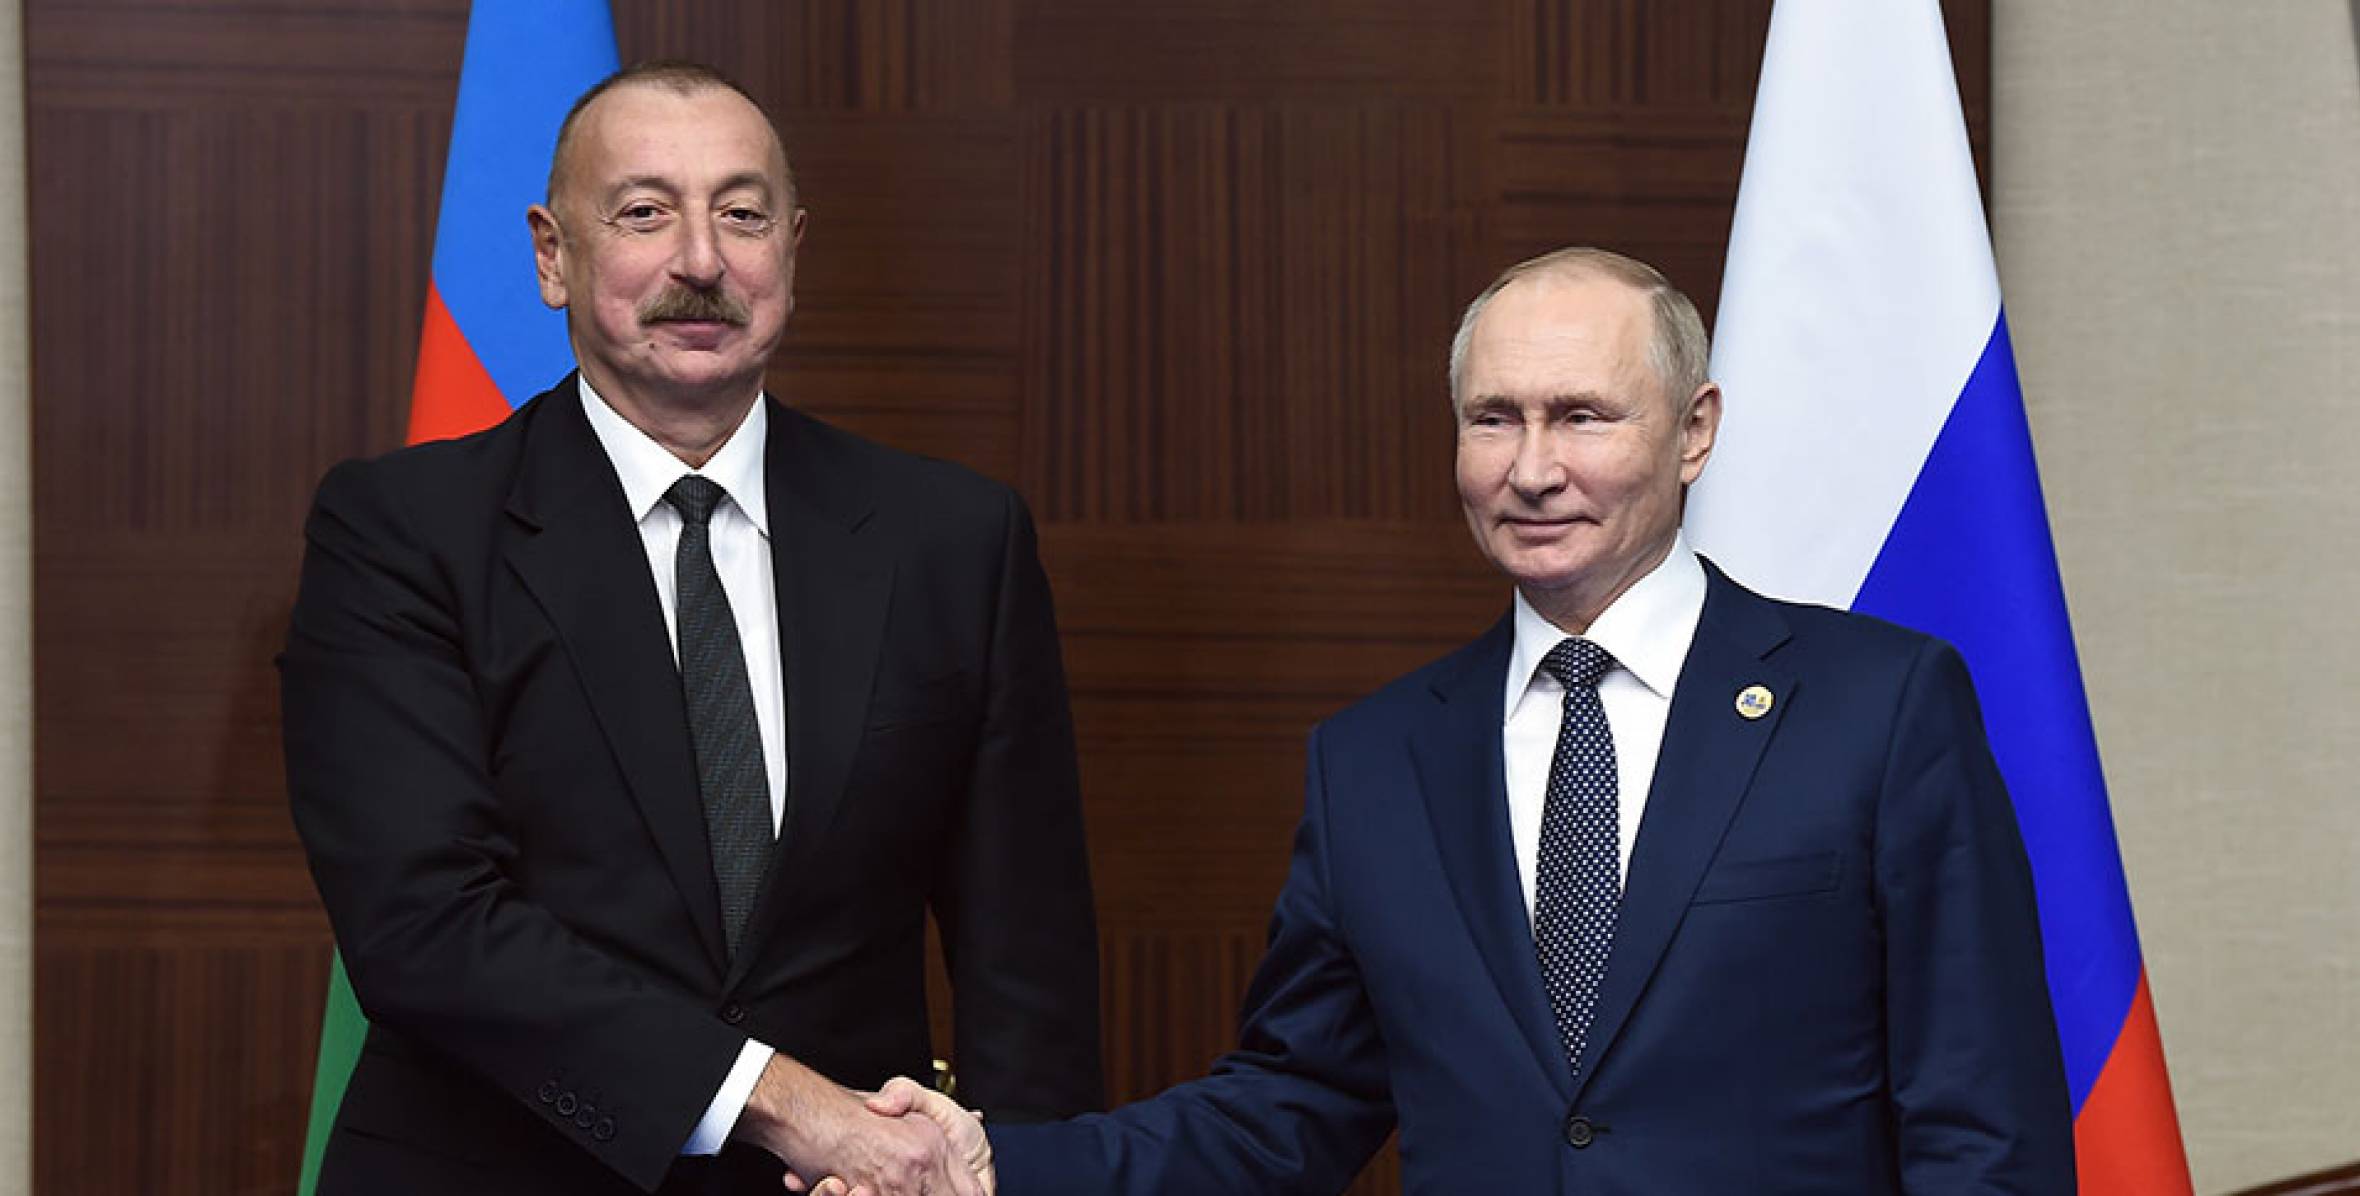 Ilham Aliyev has met with President of the Russian Federation Vladimir Putin in Astana